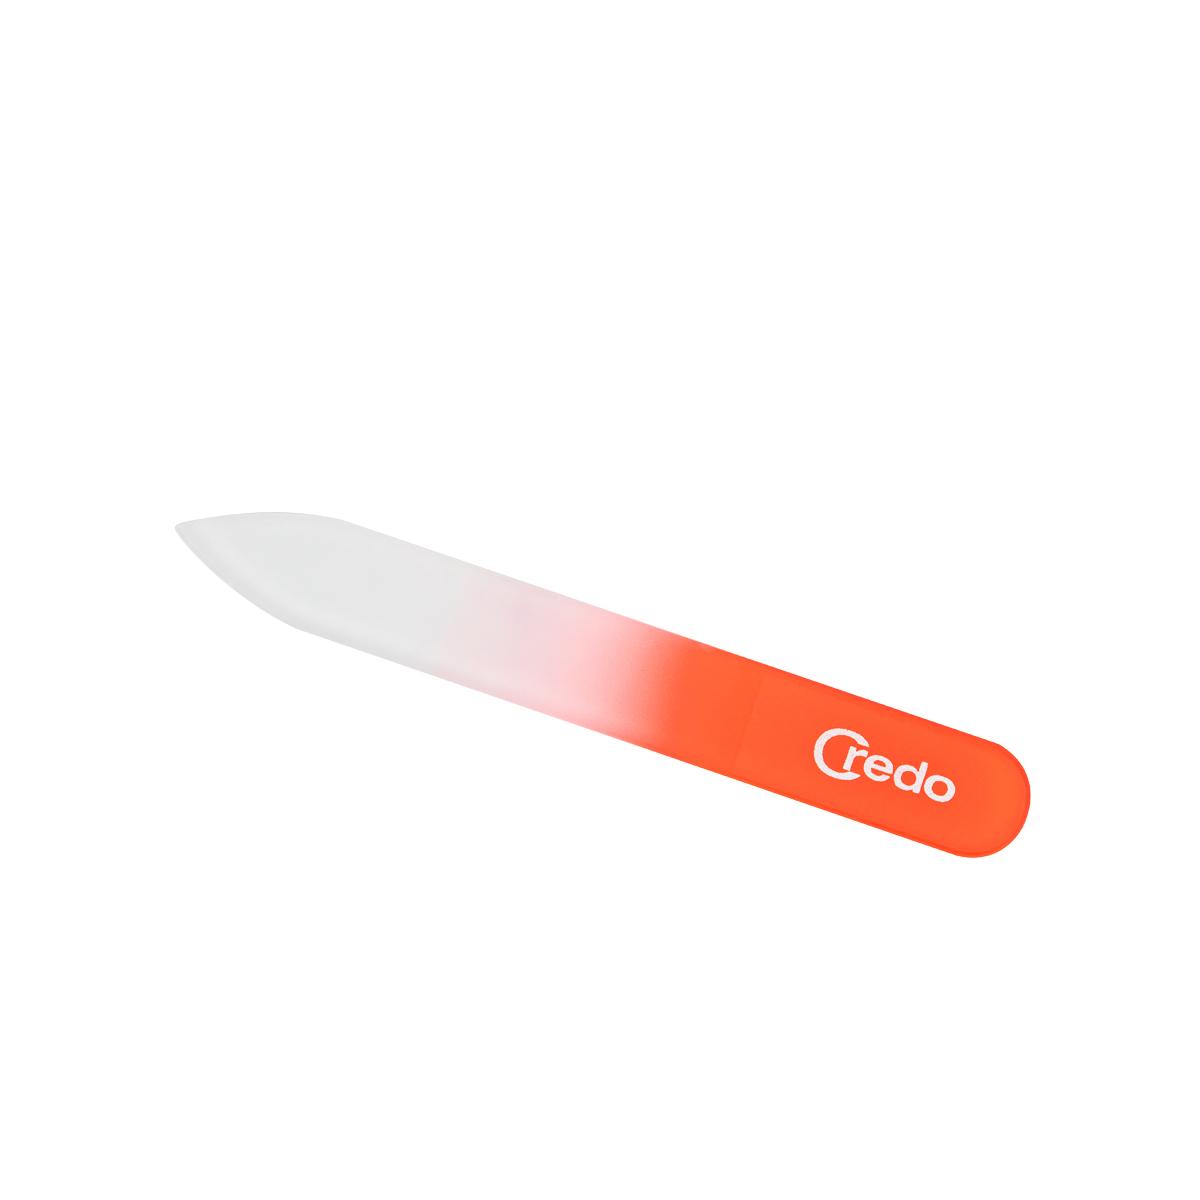 Primary image of Credo Sm Orange Glass Nail File (90x3mm) 90mm Nail File